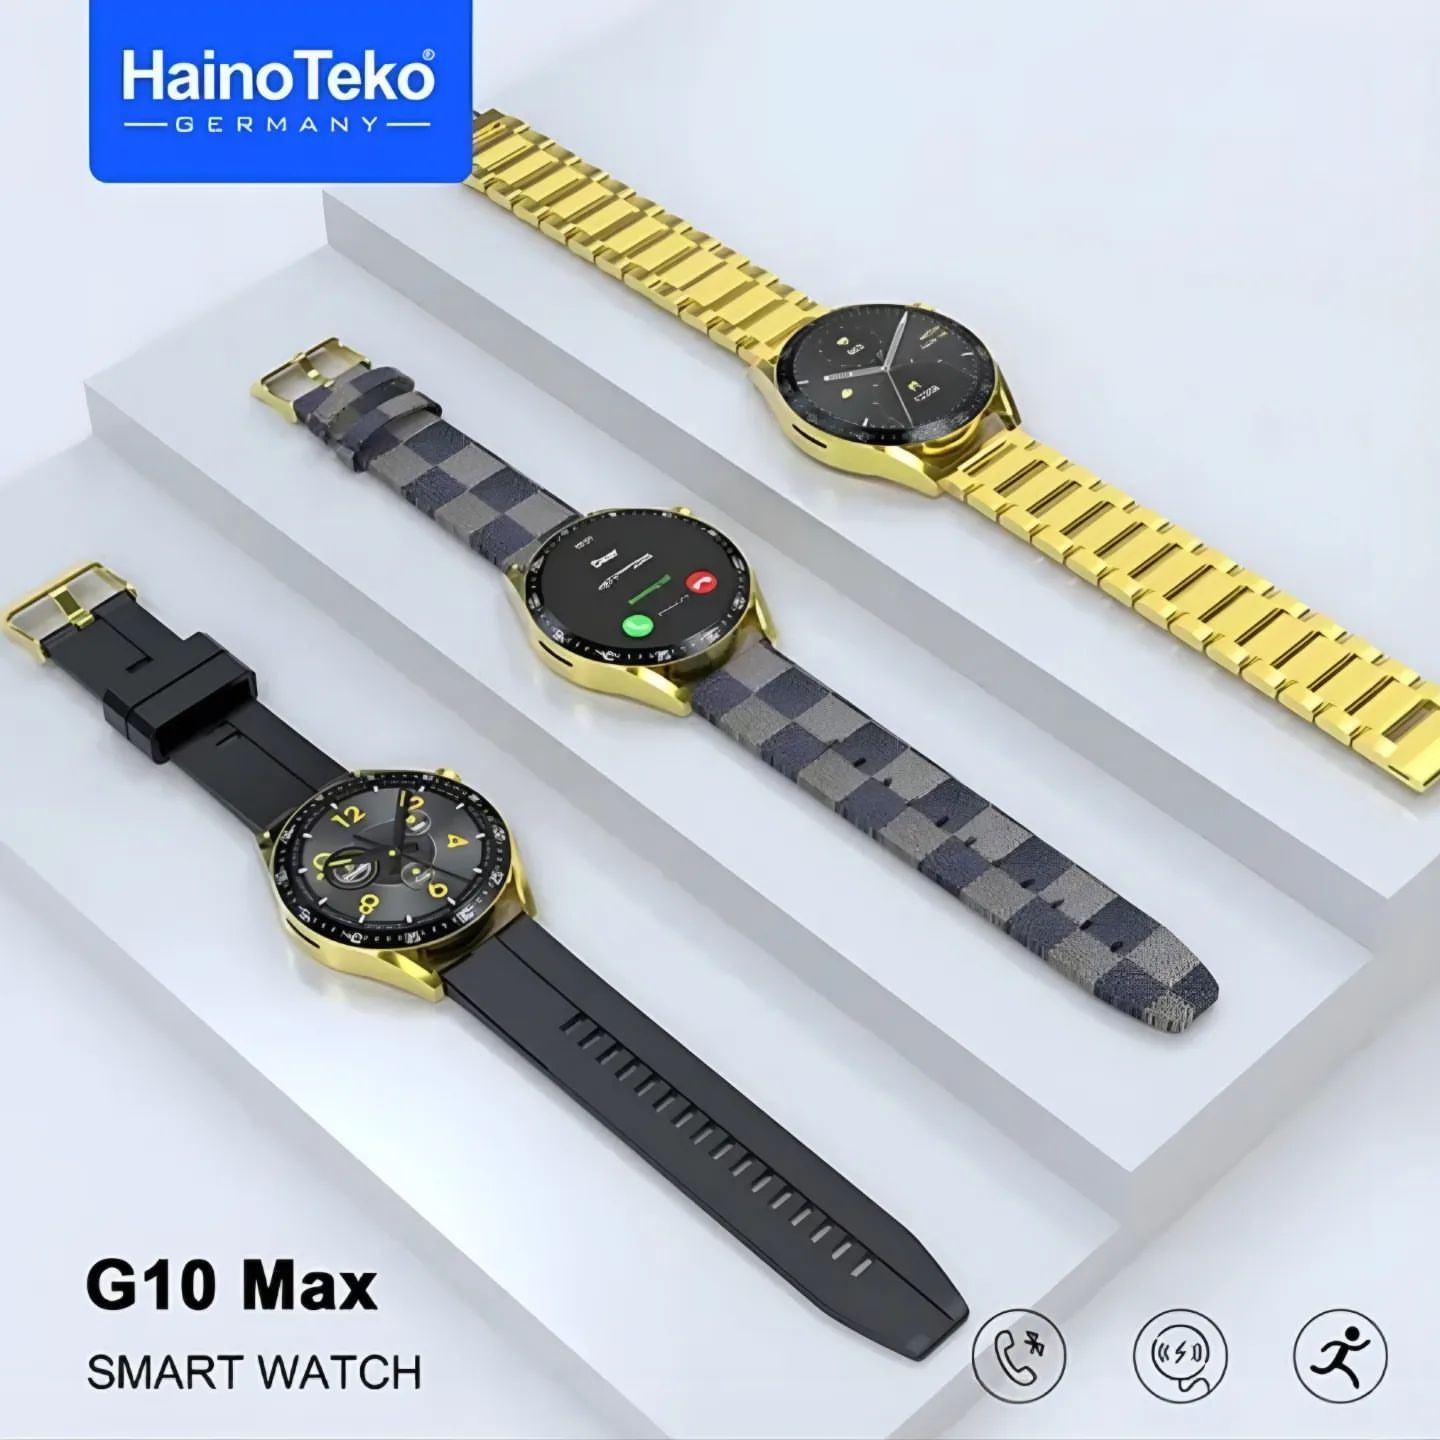 Haino Teko G10 Max Smart Watch (3 Straps in 1)